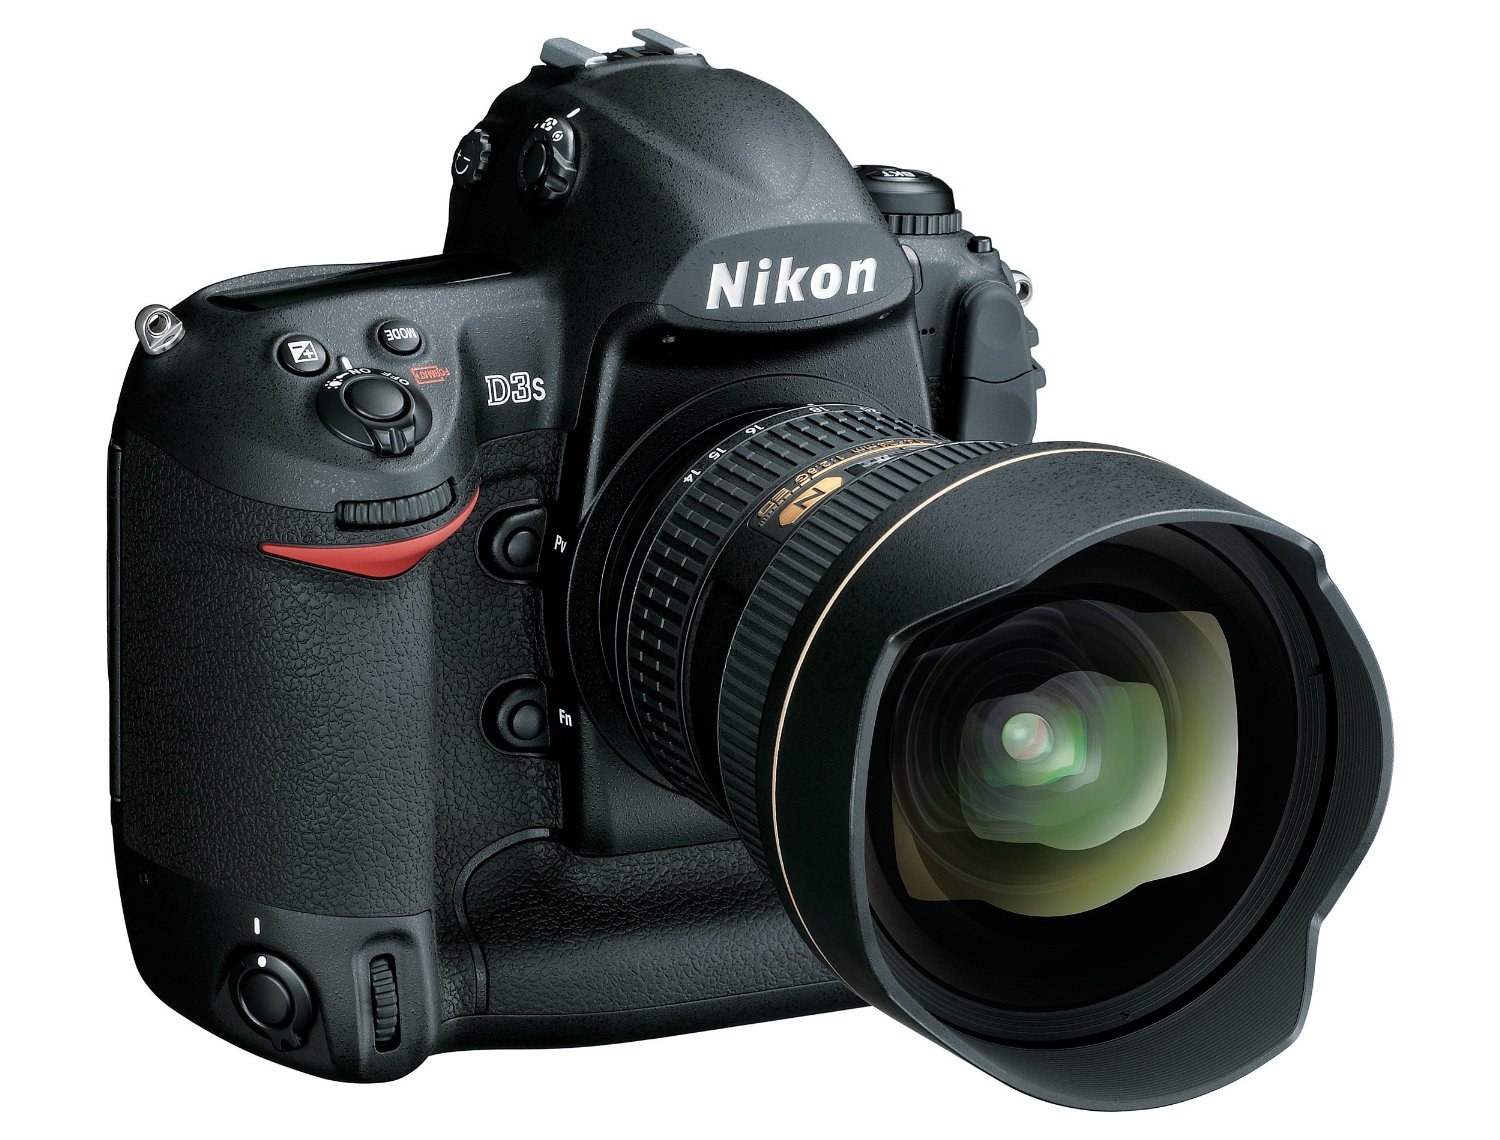 Download Nikon D90 Driver Xp